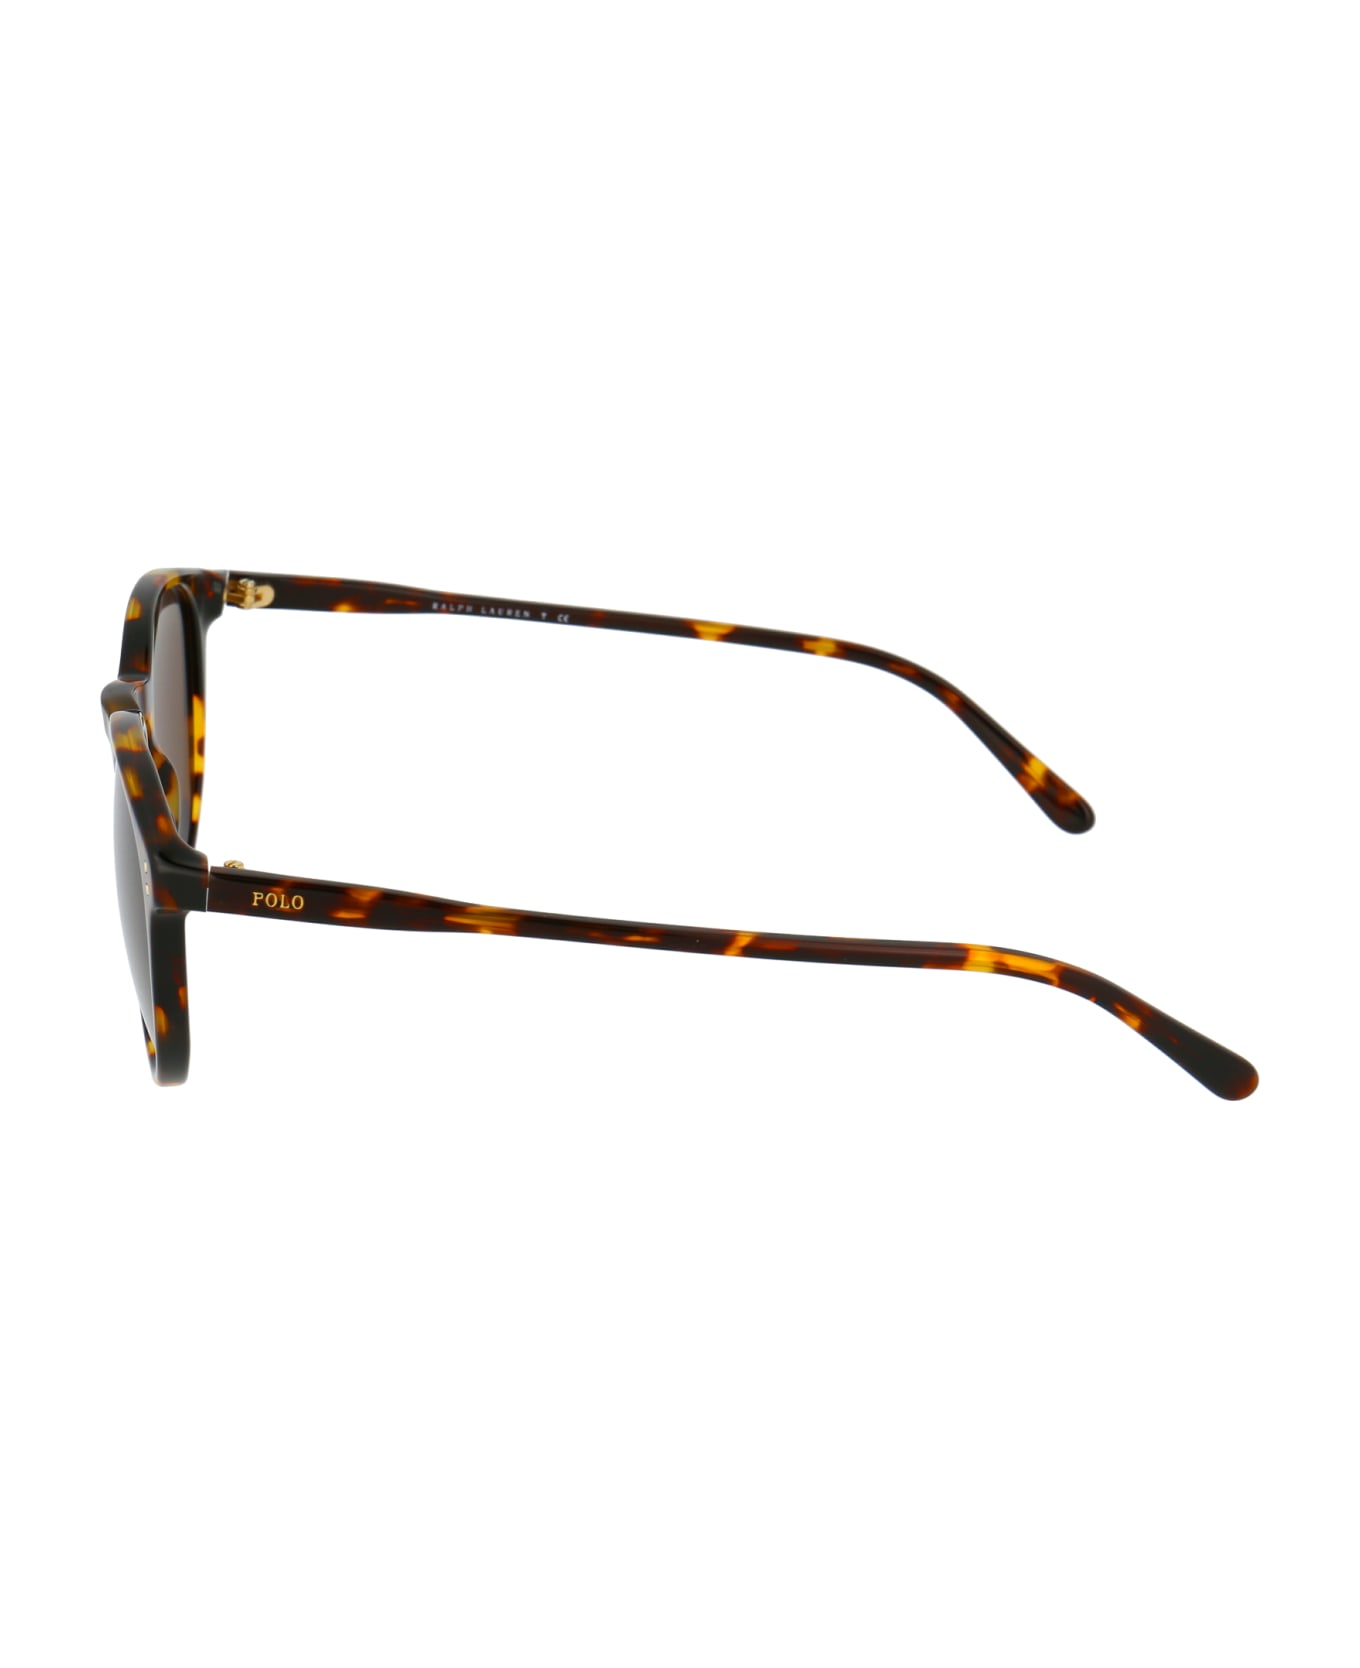 Polo Ralph Lauren 0ph4110 Sunglasses - 513473 Havana